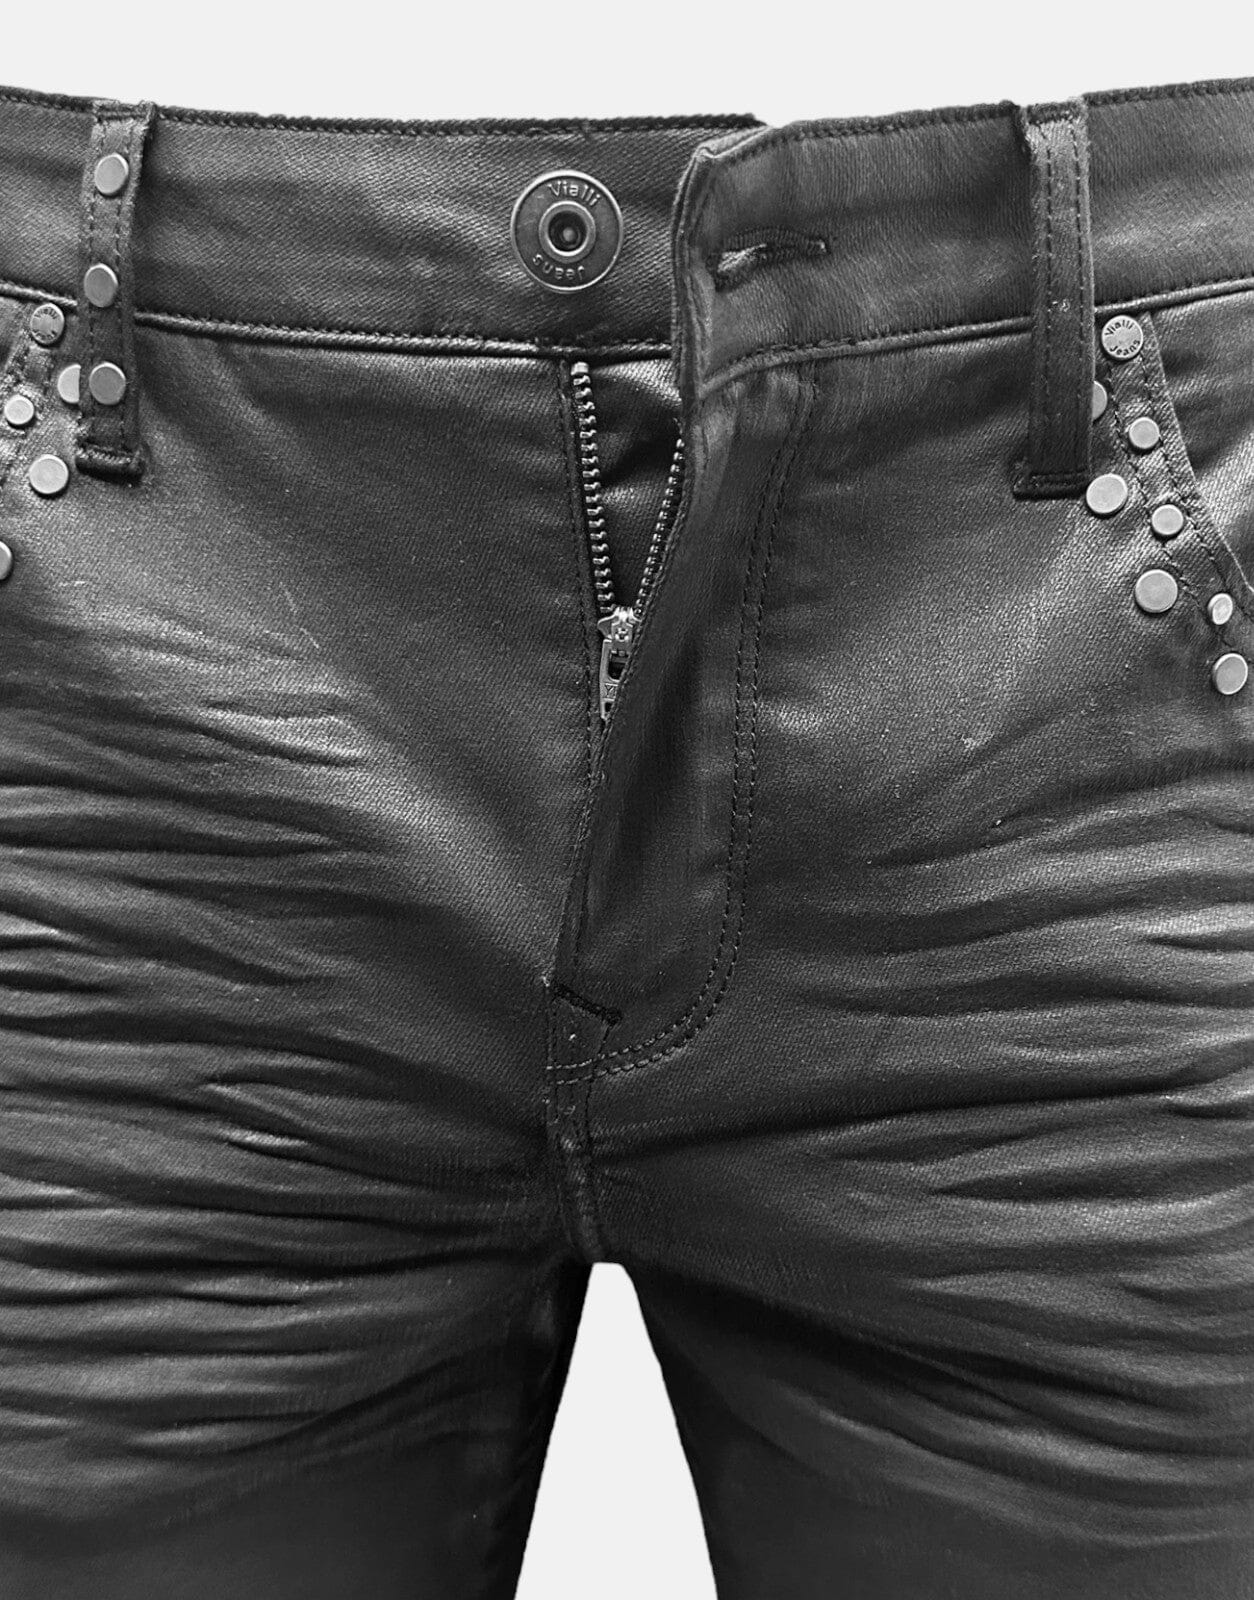 Vialli Dagger Ultra Fit Black Jeans - Subwear